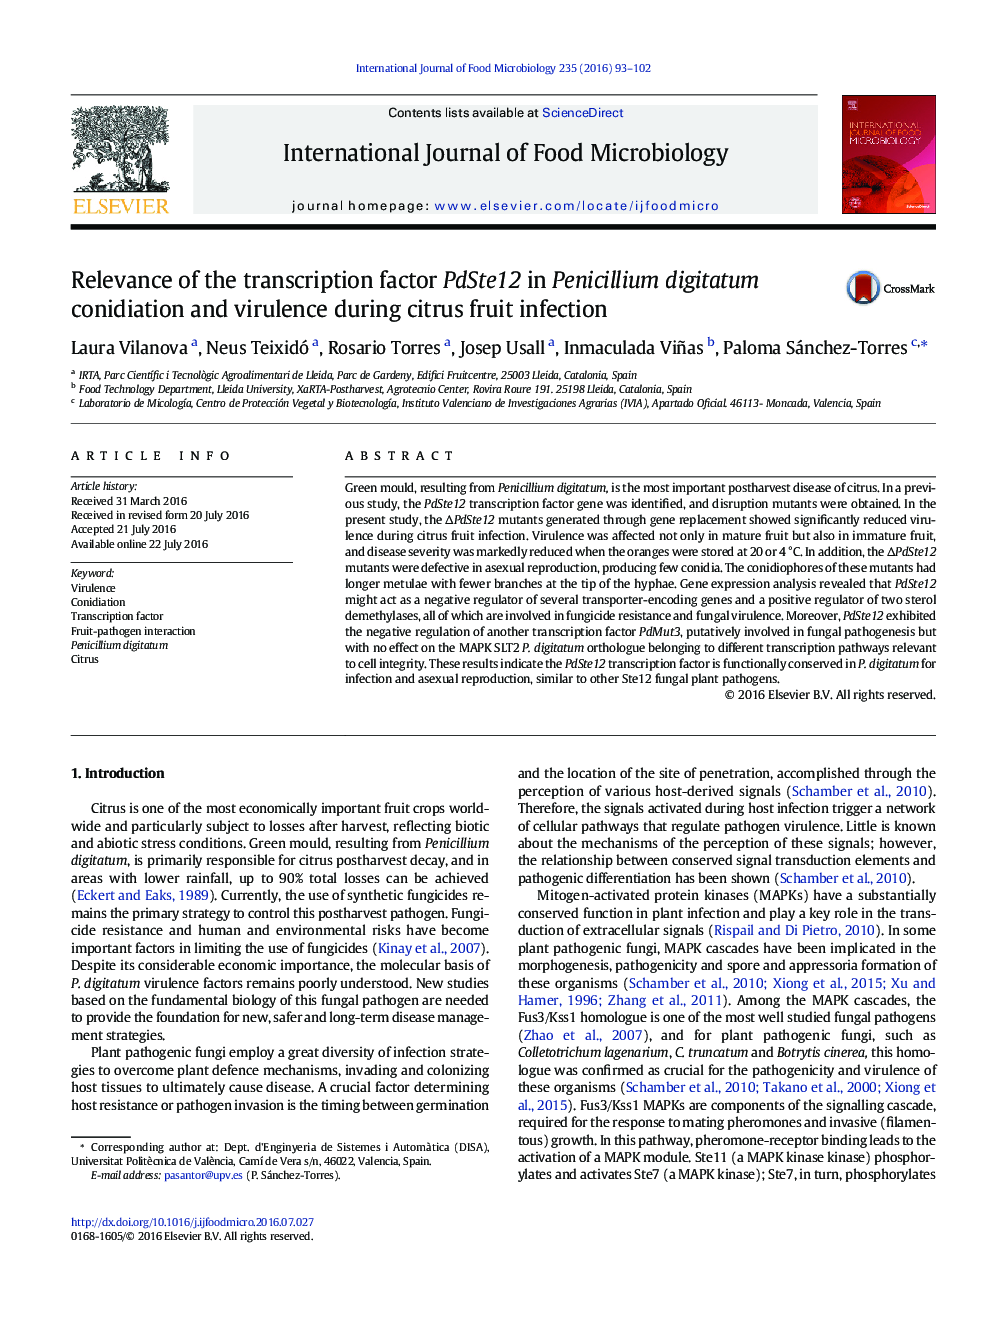 Relevance of the transcription factor PdSte12 in Penicillium digitatum conidiation and virulence during citrus fruit infection